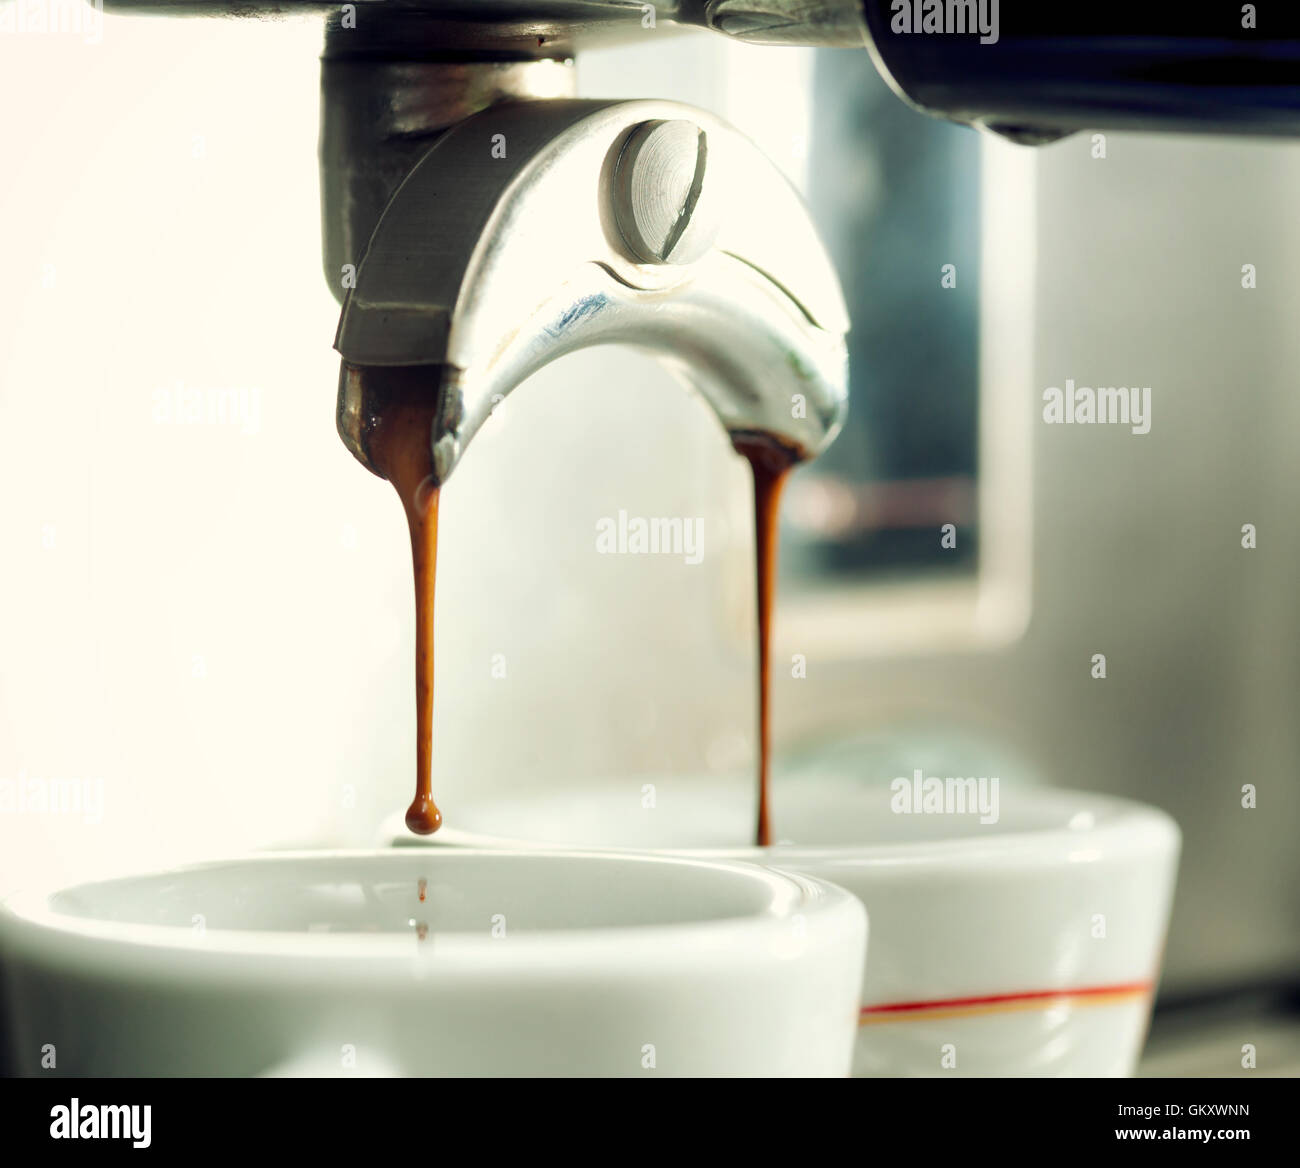 https://c8.alamy.com/comp/GKXWNN/close-up-of-an-espresso-machine-making-a-cup-of-coffee-GKXWNN.jpg